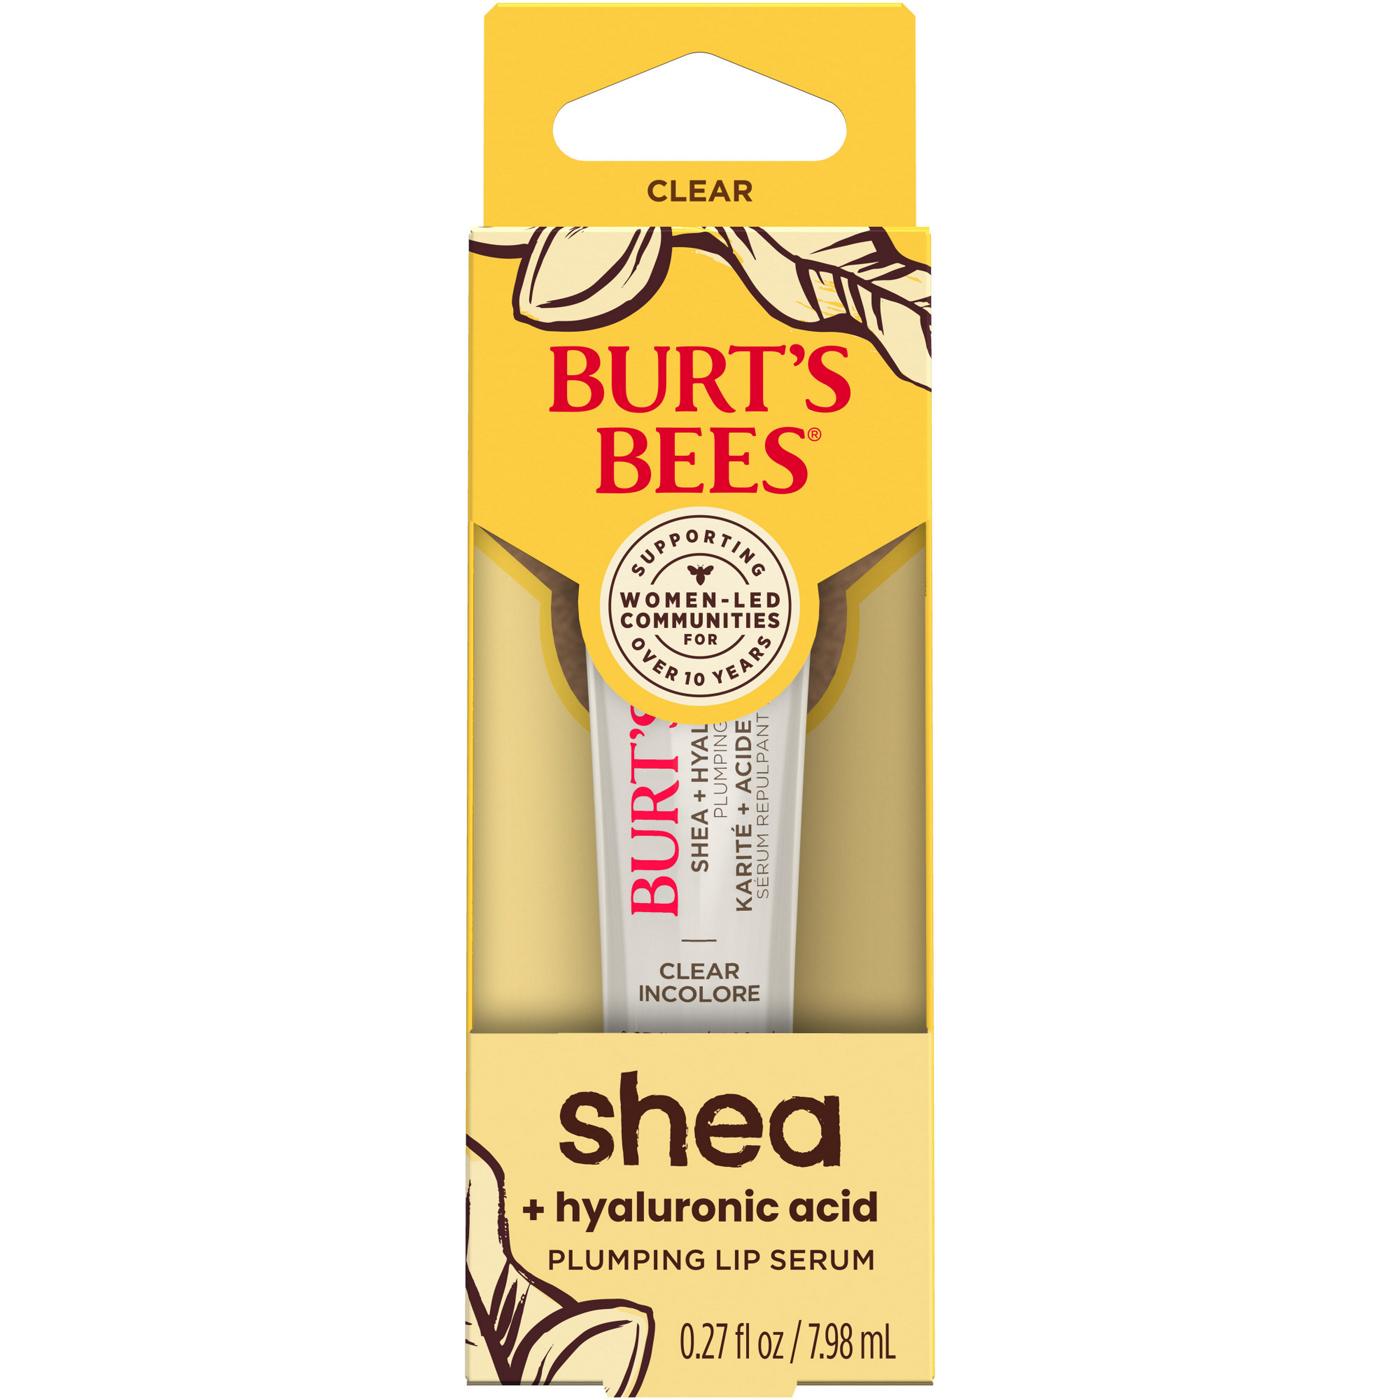 Burt's Bees Shea Plumping Lip Serum - Clear; image 1 of 9